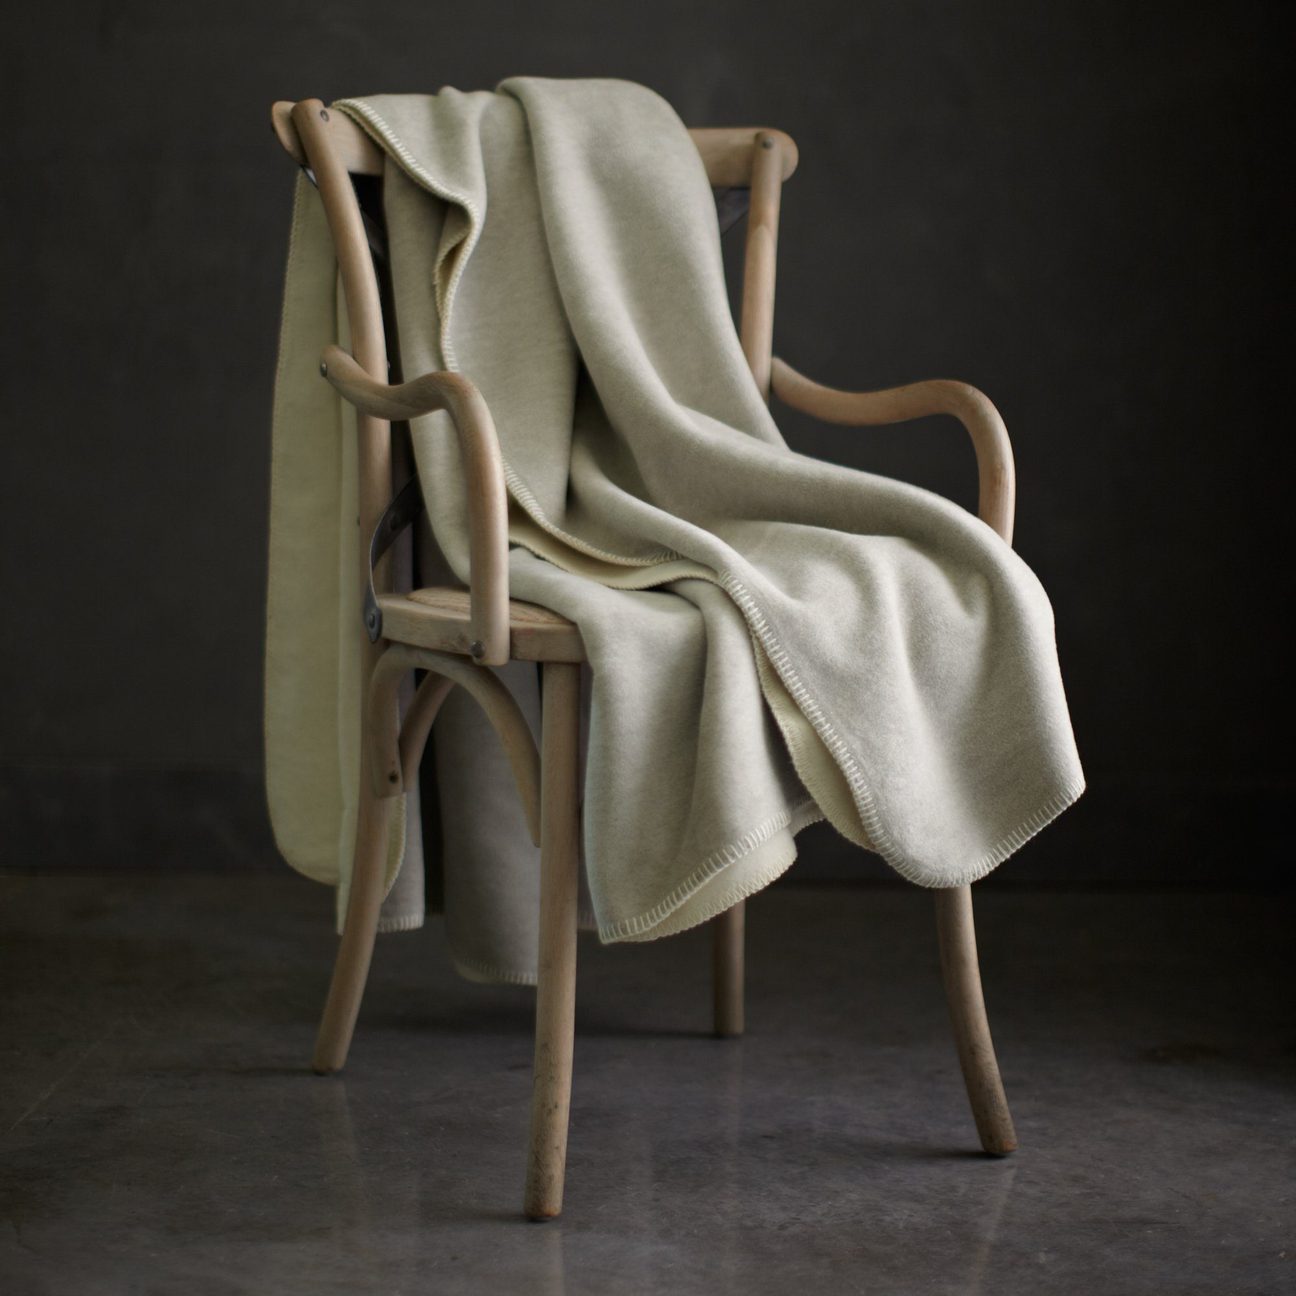 Alta Reversible Cotton Blankets - Pioneer Linens